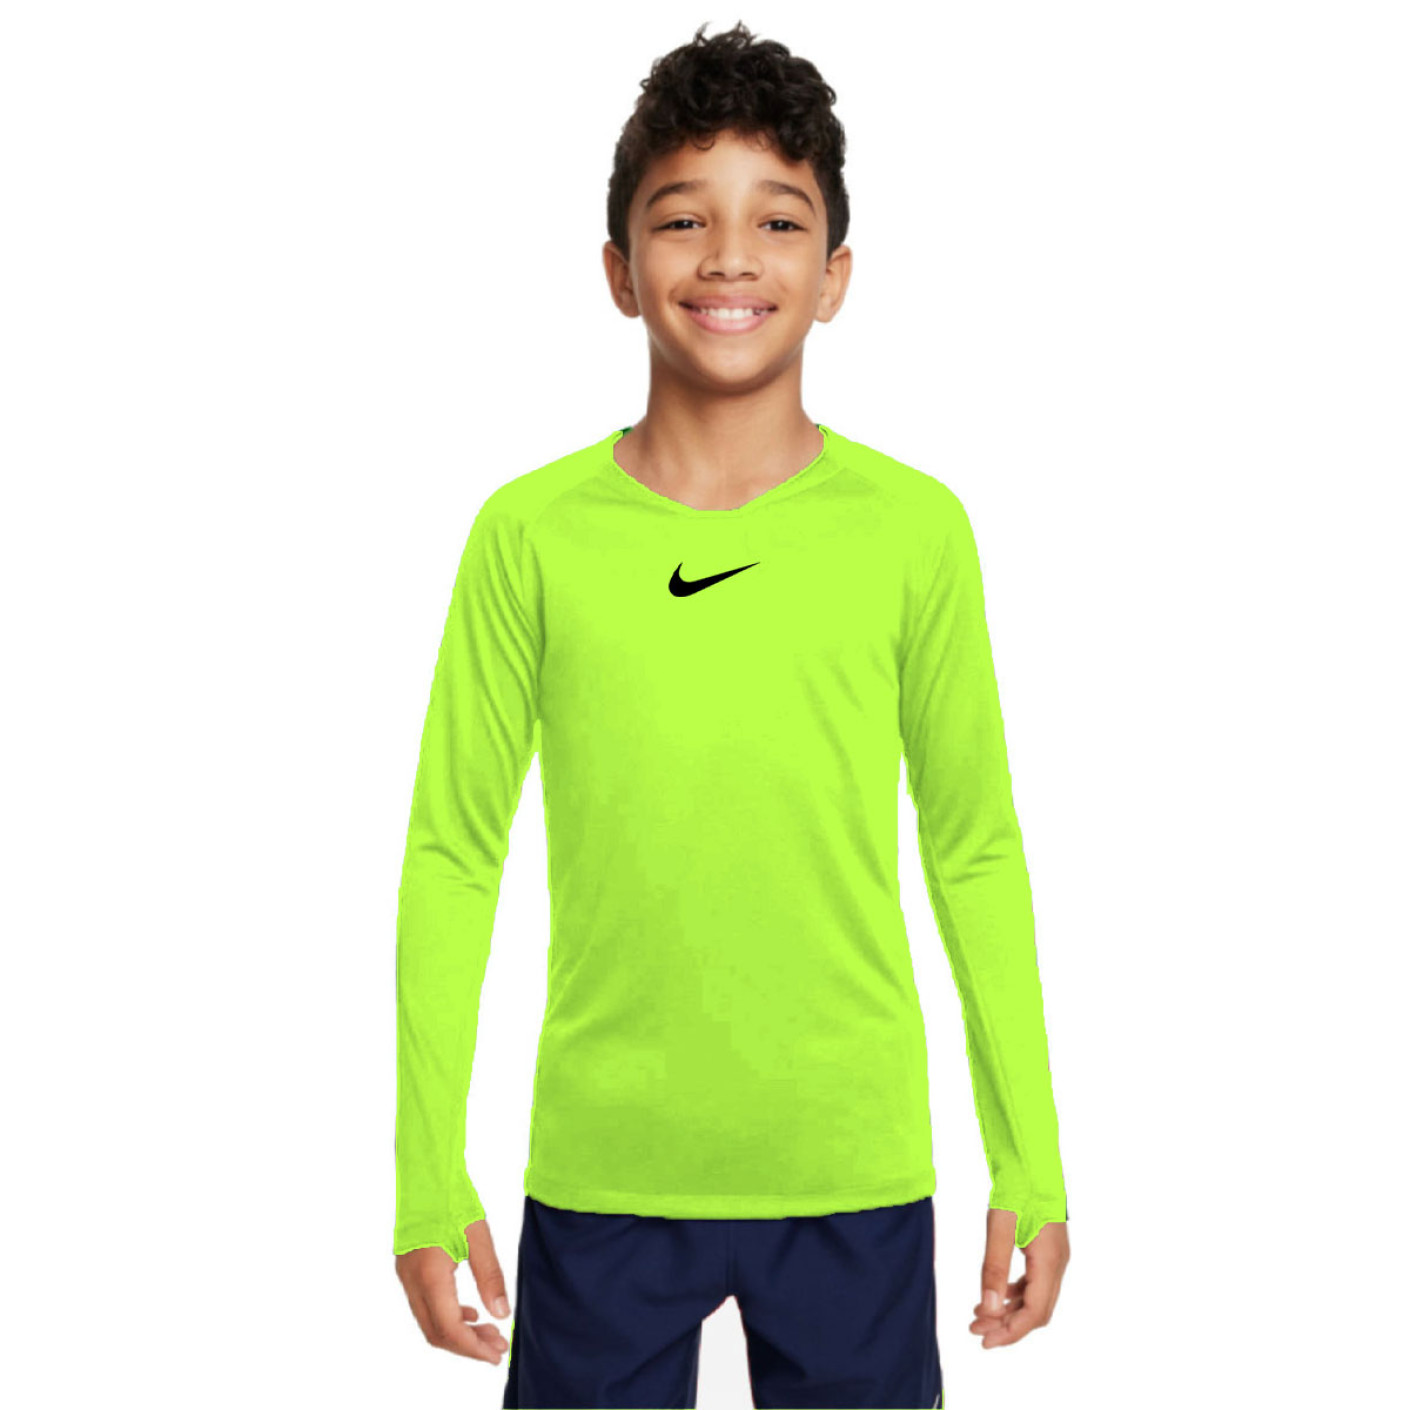 Nike Dri-FIT Park Long Sleeve Undershirt Kids Neon Yellow Black